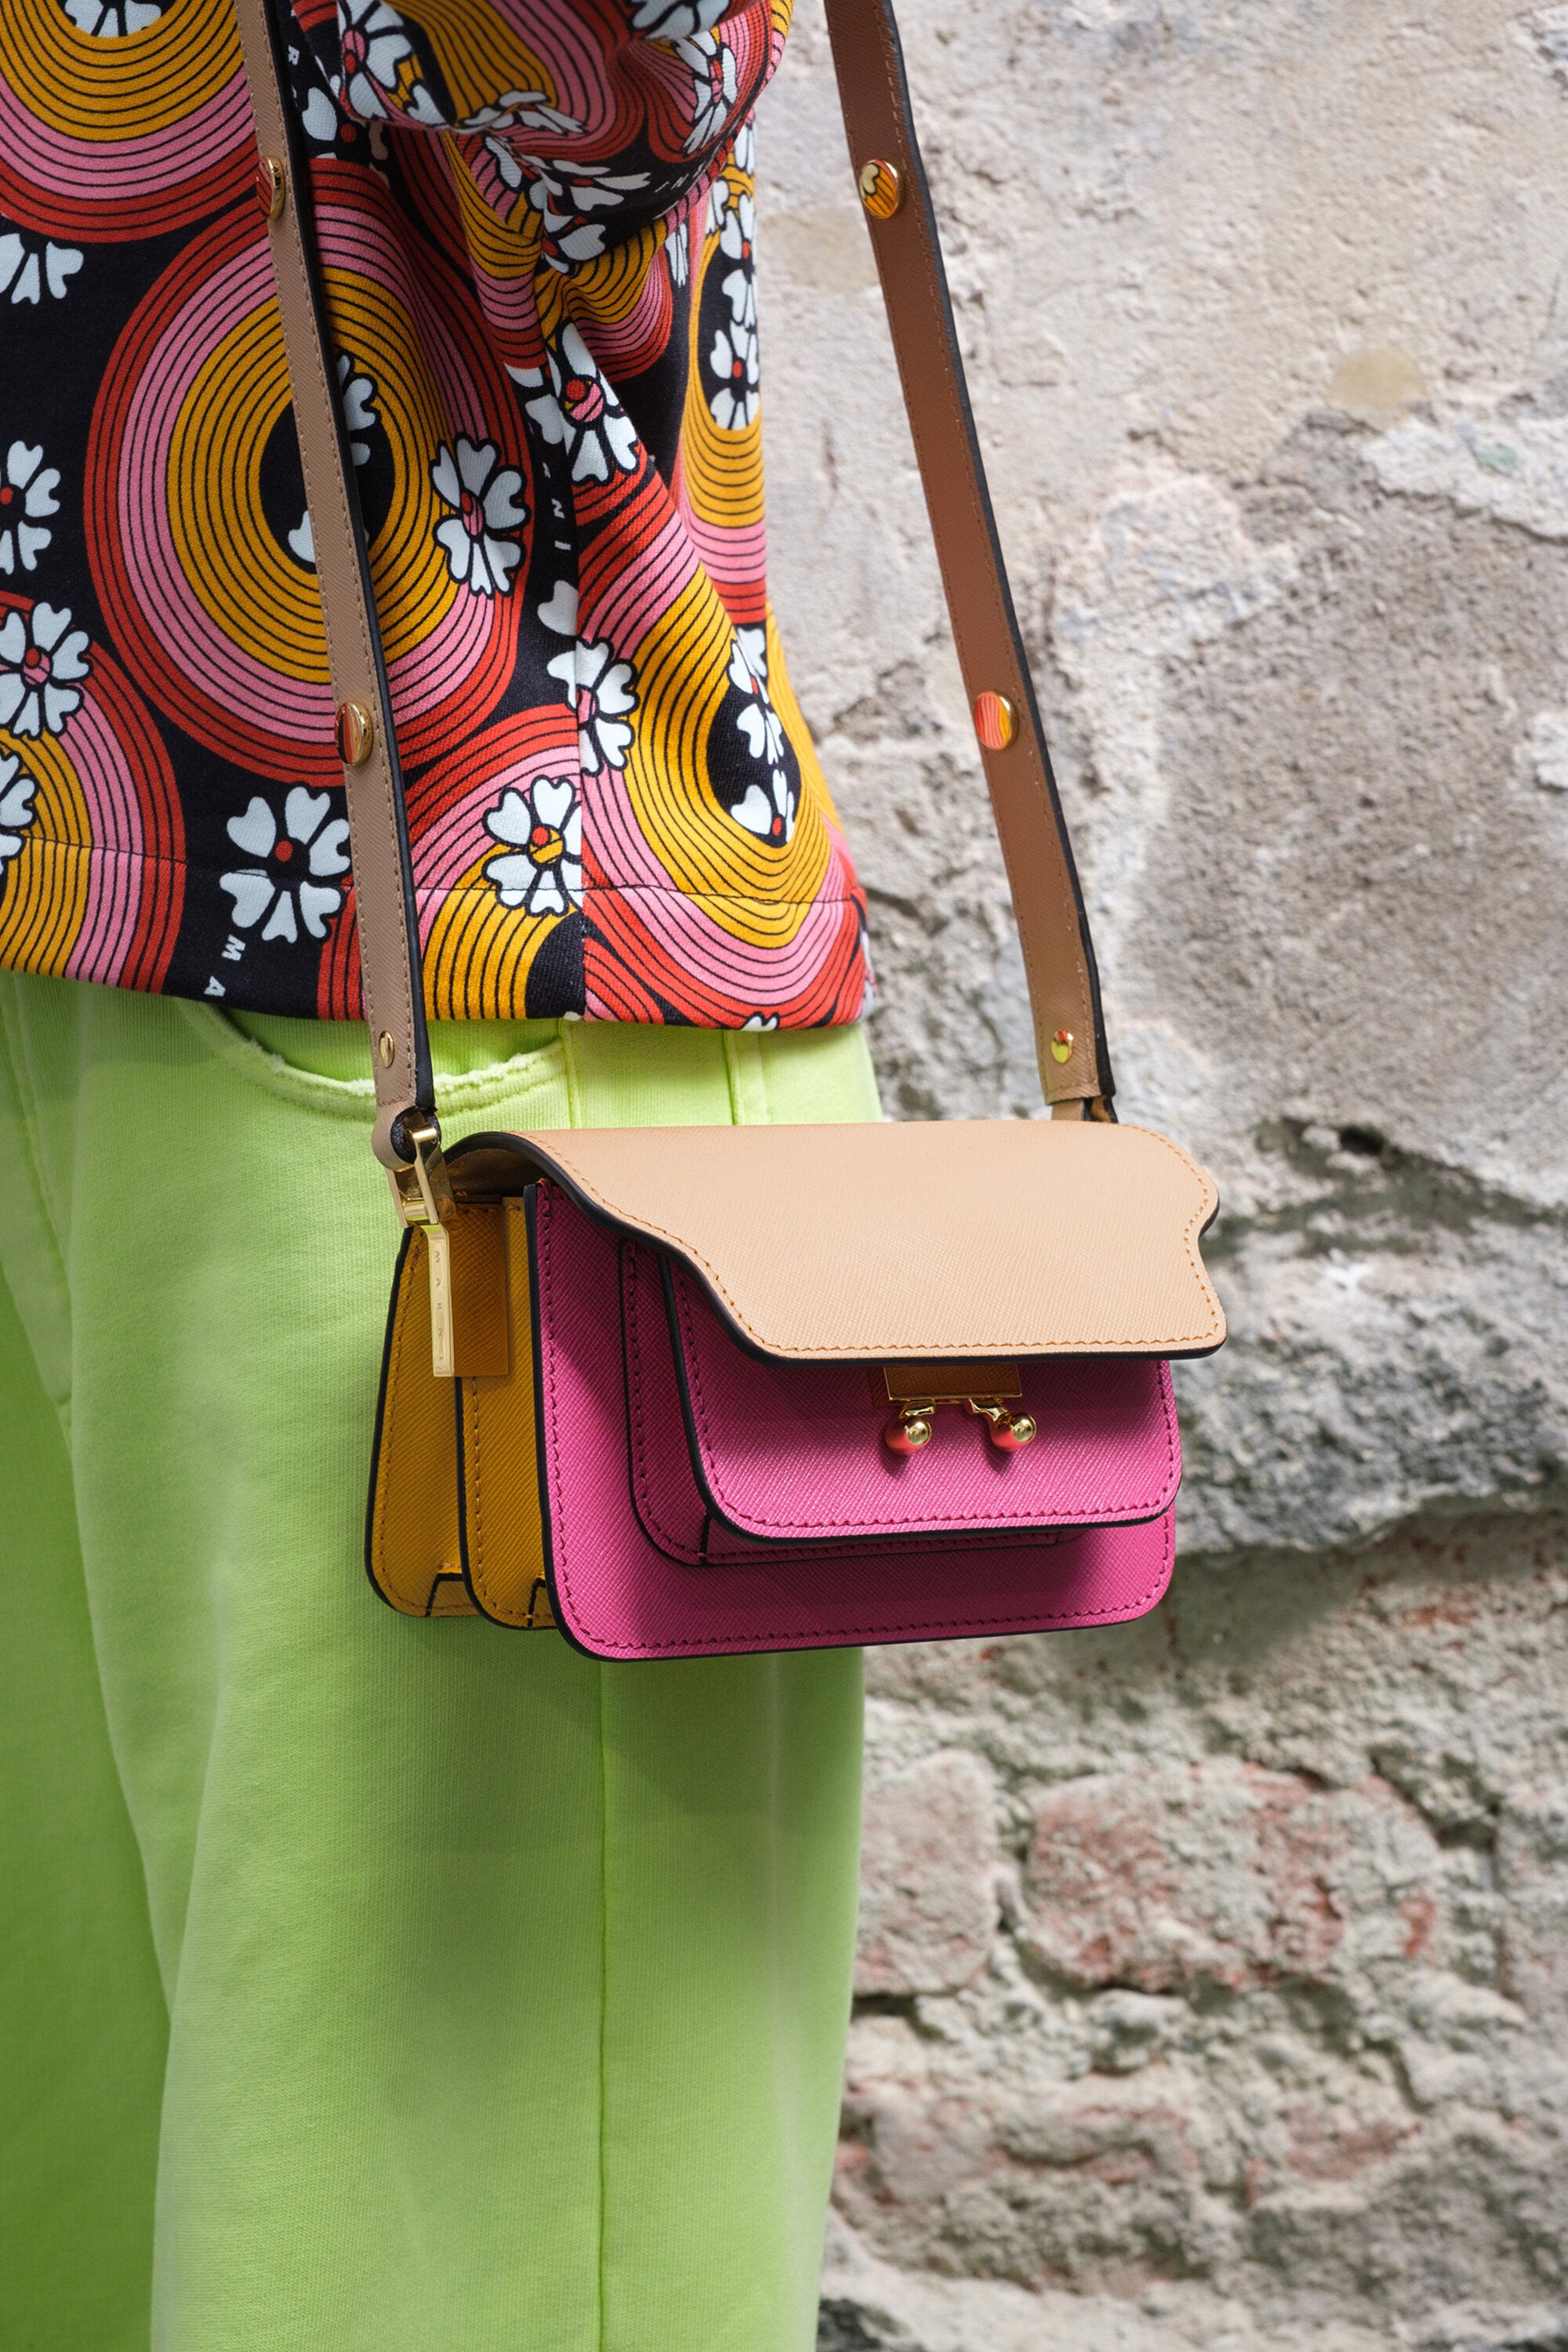 Tricolor Trunk bag in saffiano leather